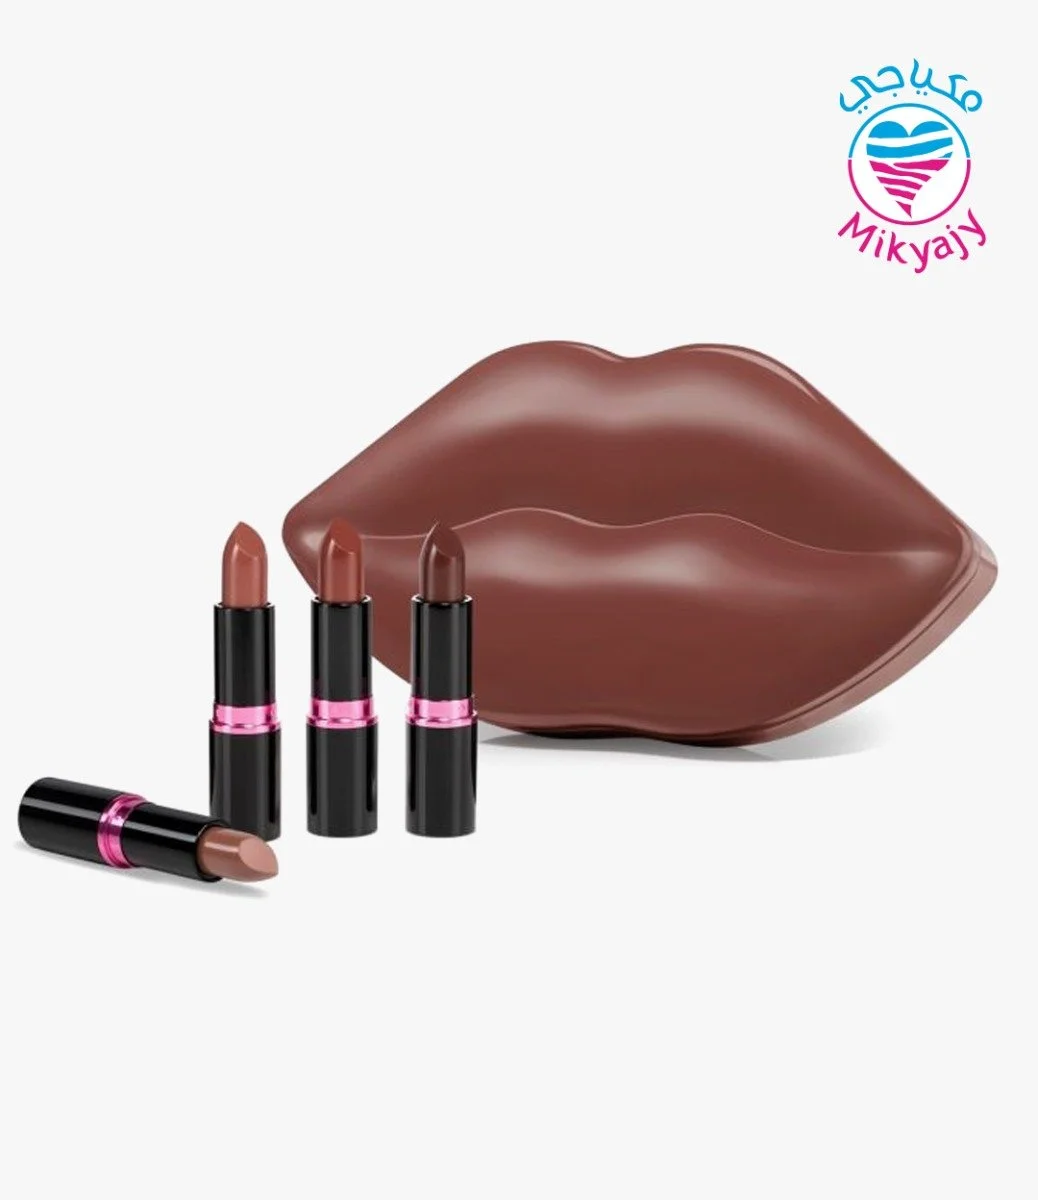 Bold Browns Lipstick Set by Mikyajy*